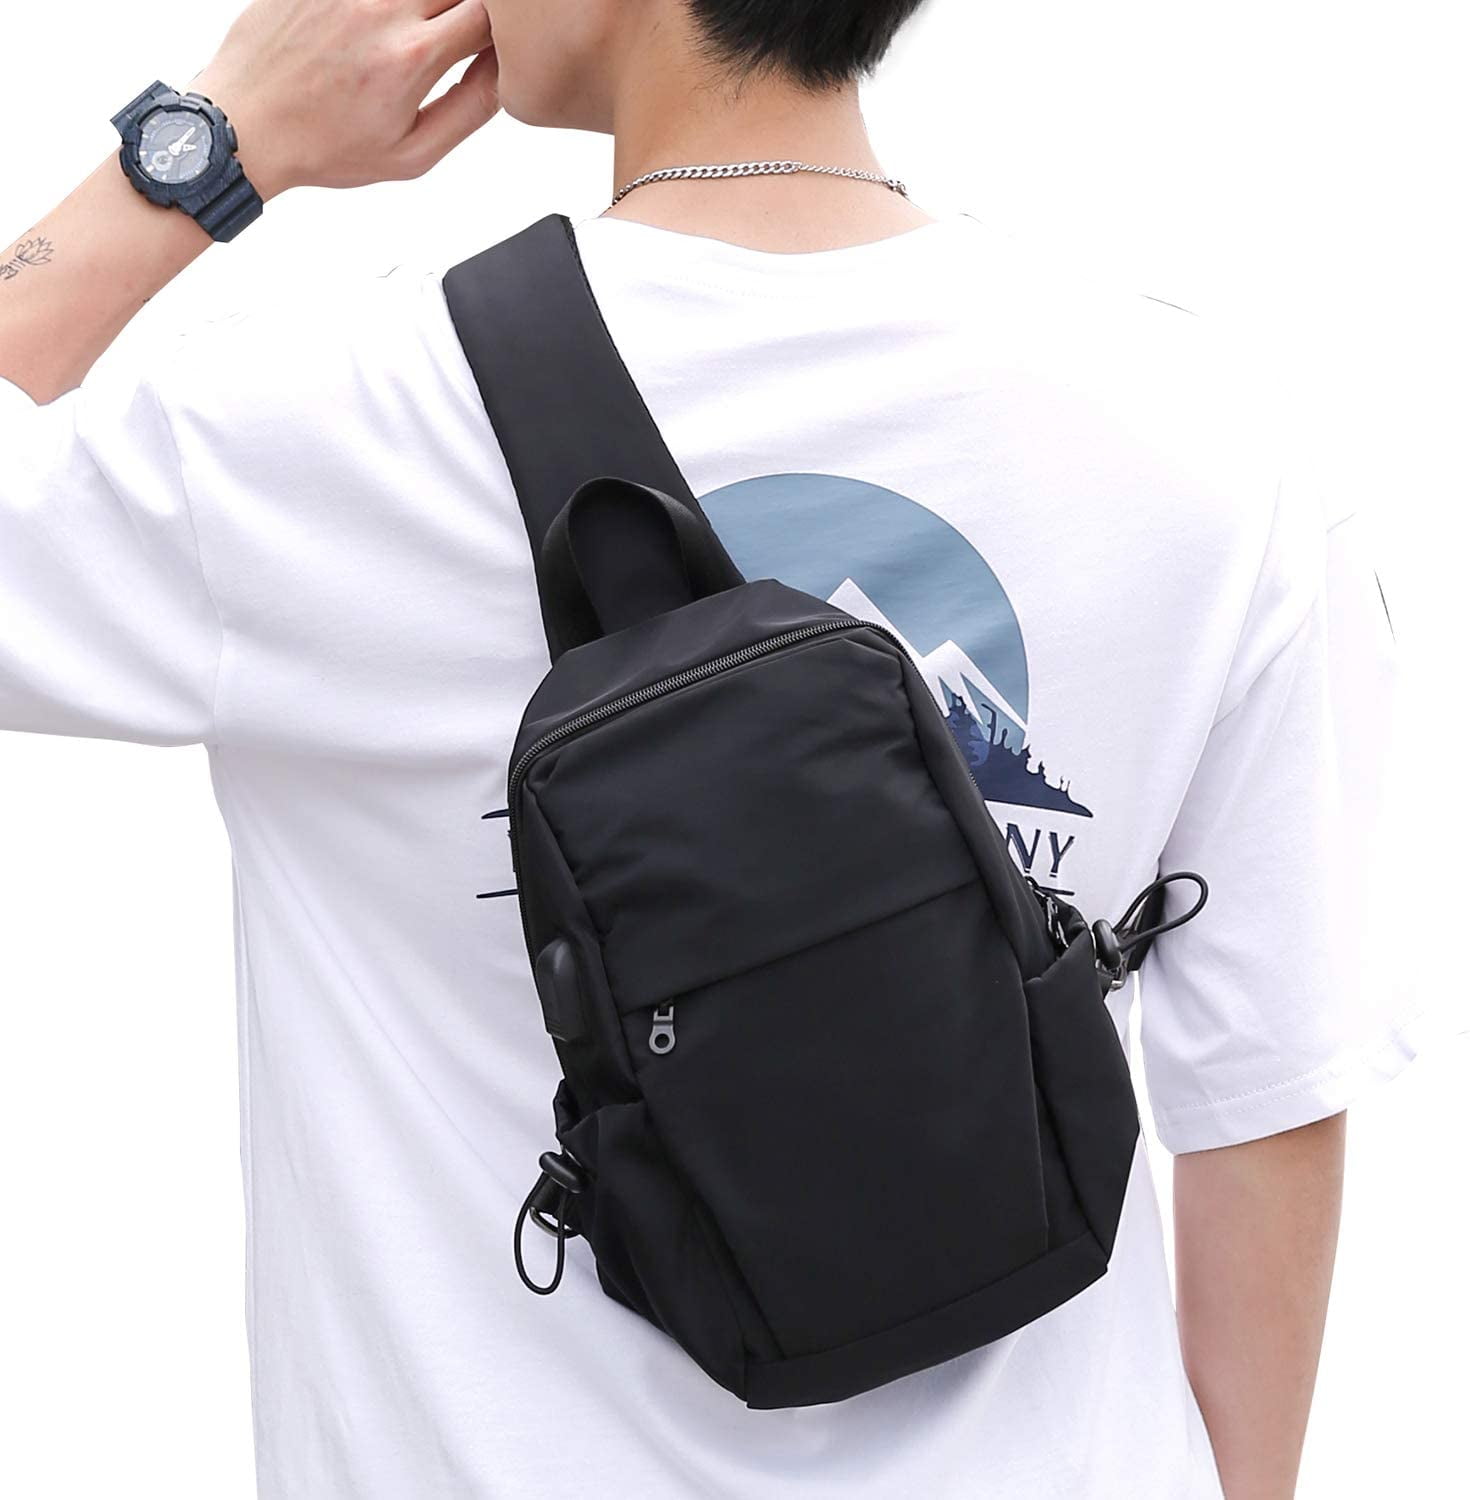 Cool One Shoulder Backpack Chest Pack with Side Pocket Small Sling Bag for Boys Men